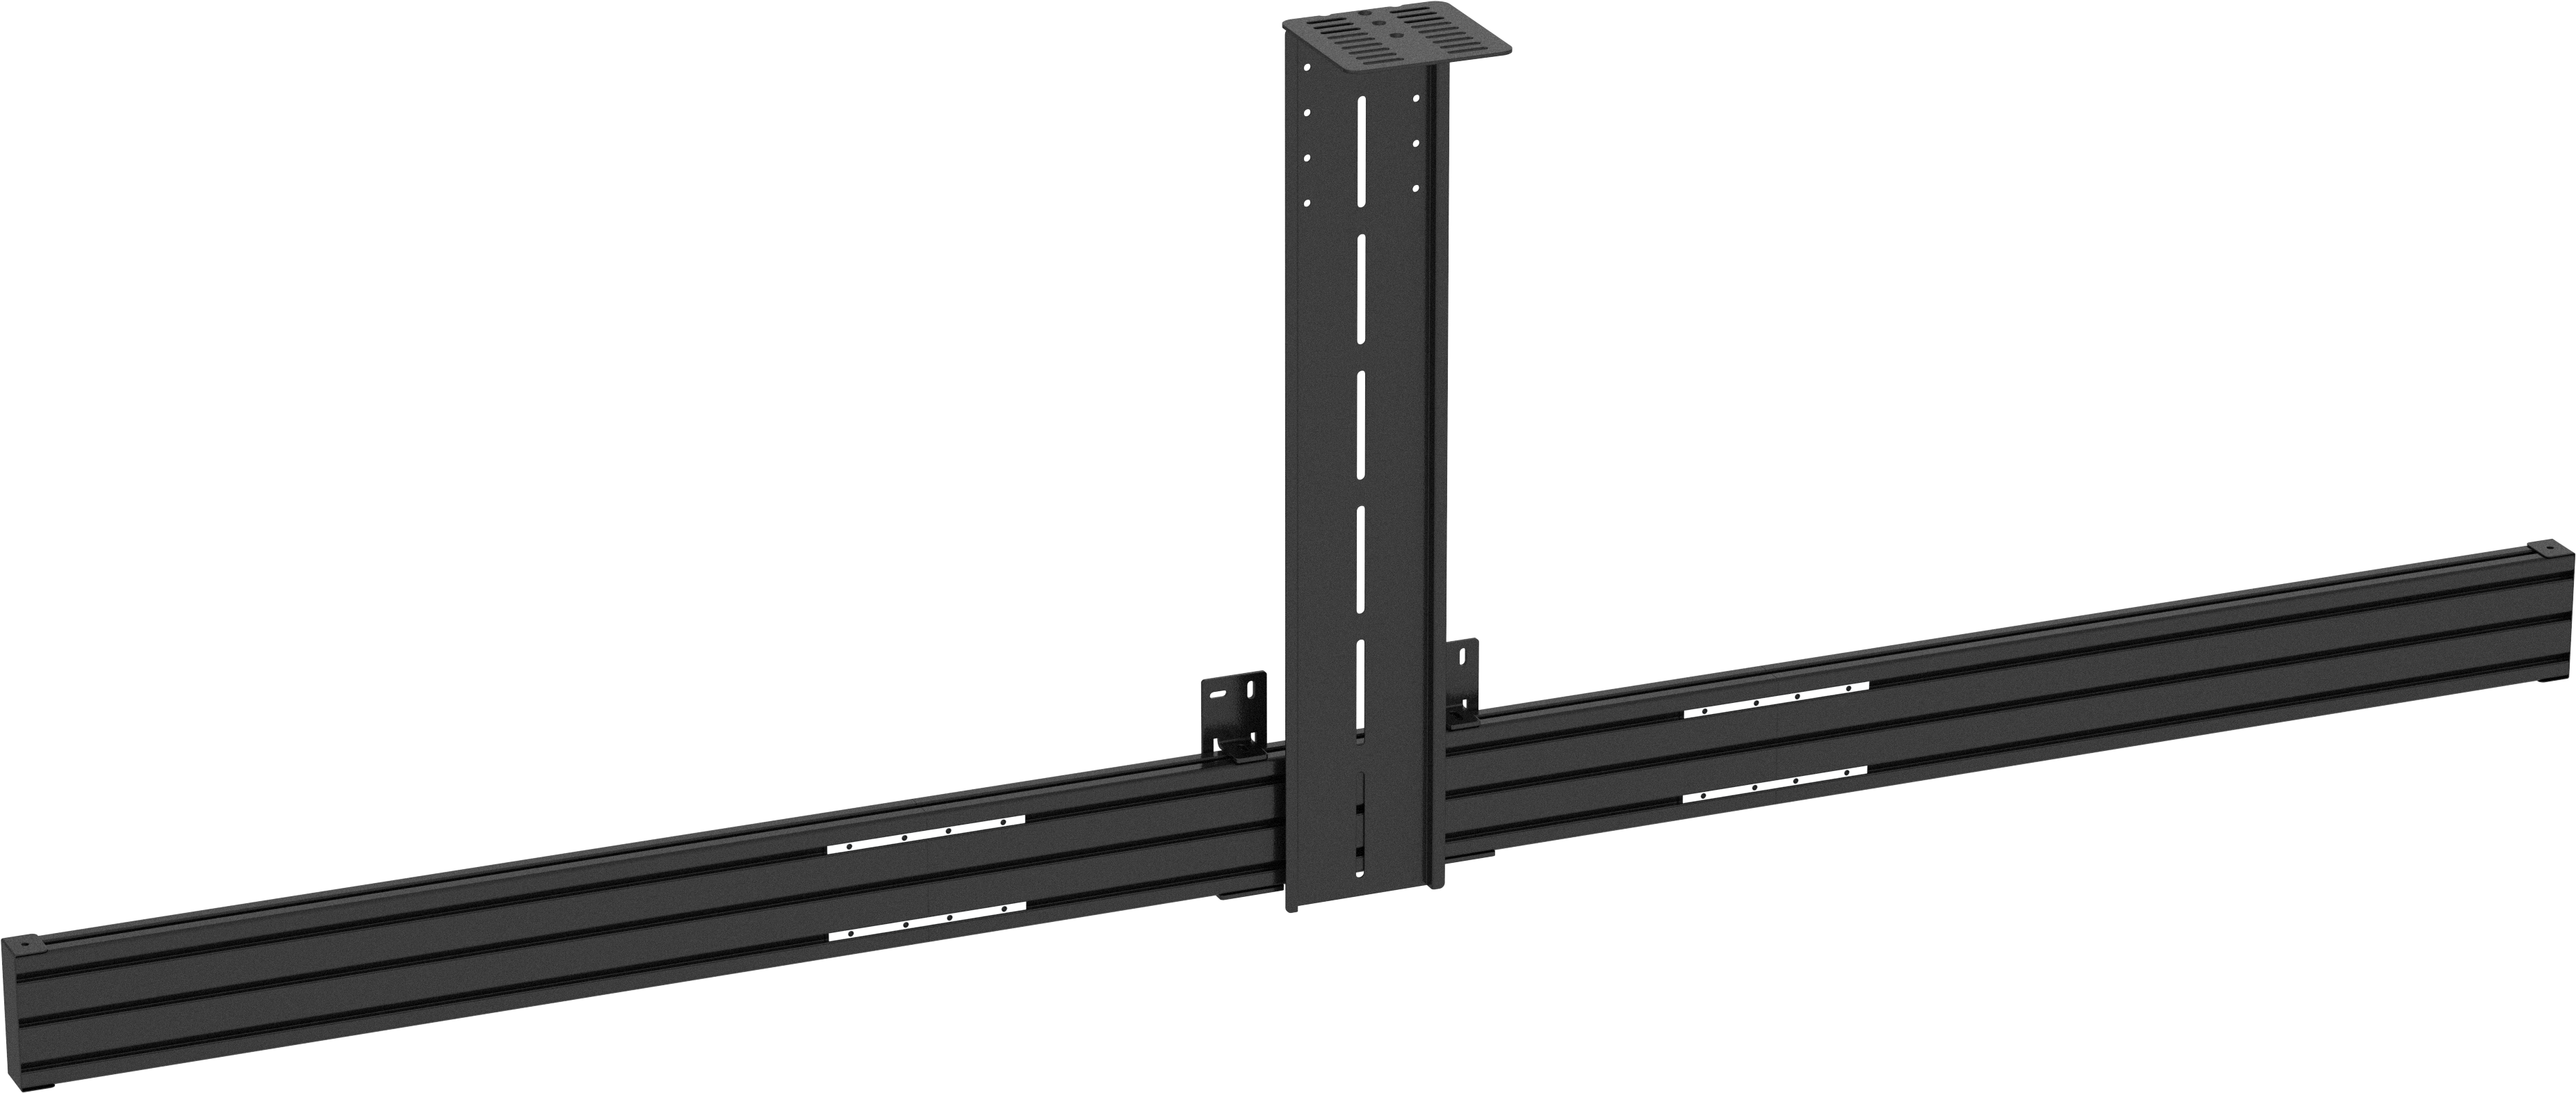 An image showing Dual Display Rail